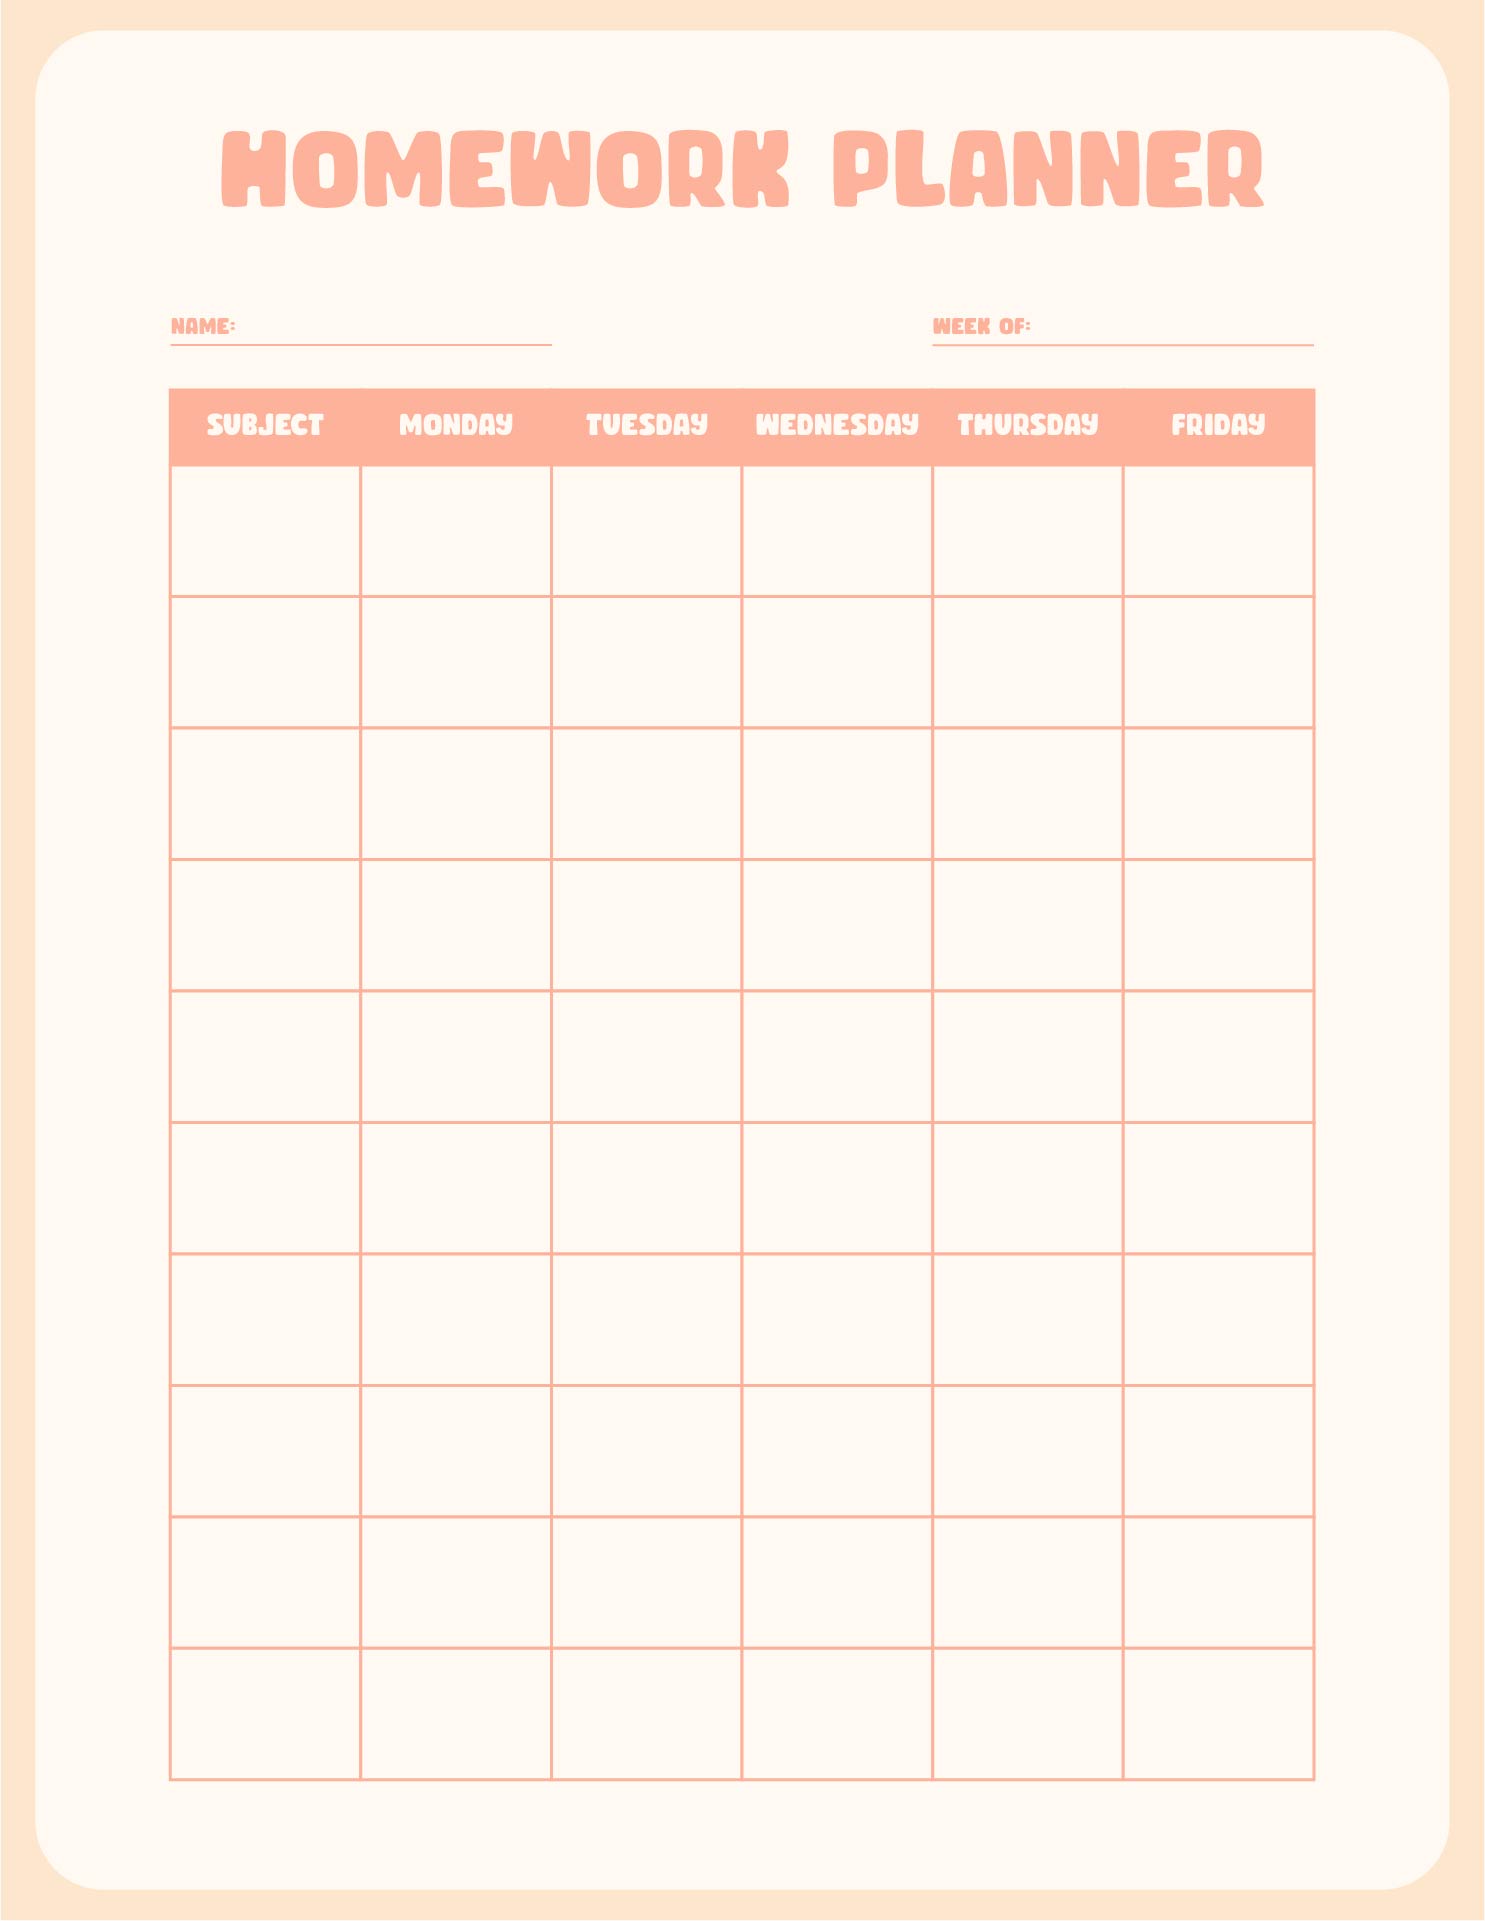 Printable Homework Planner Template